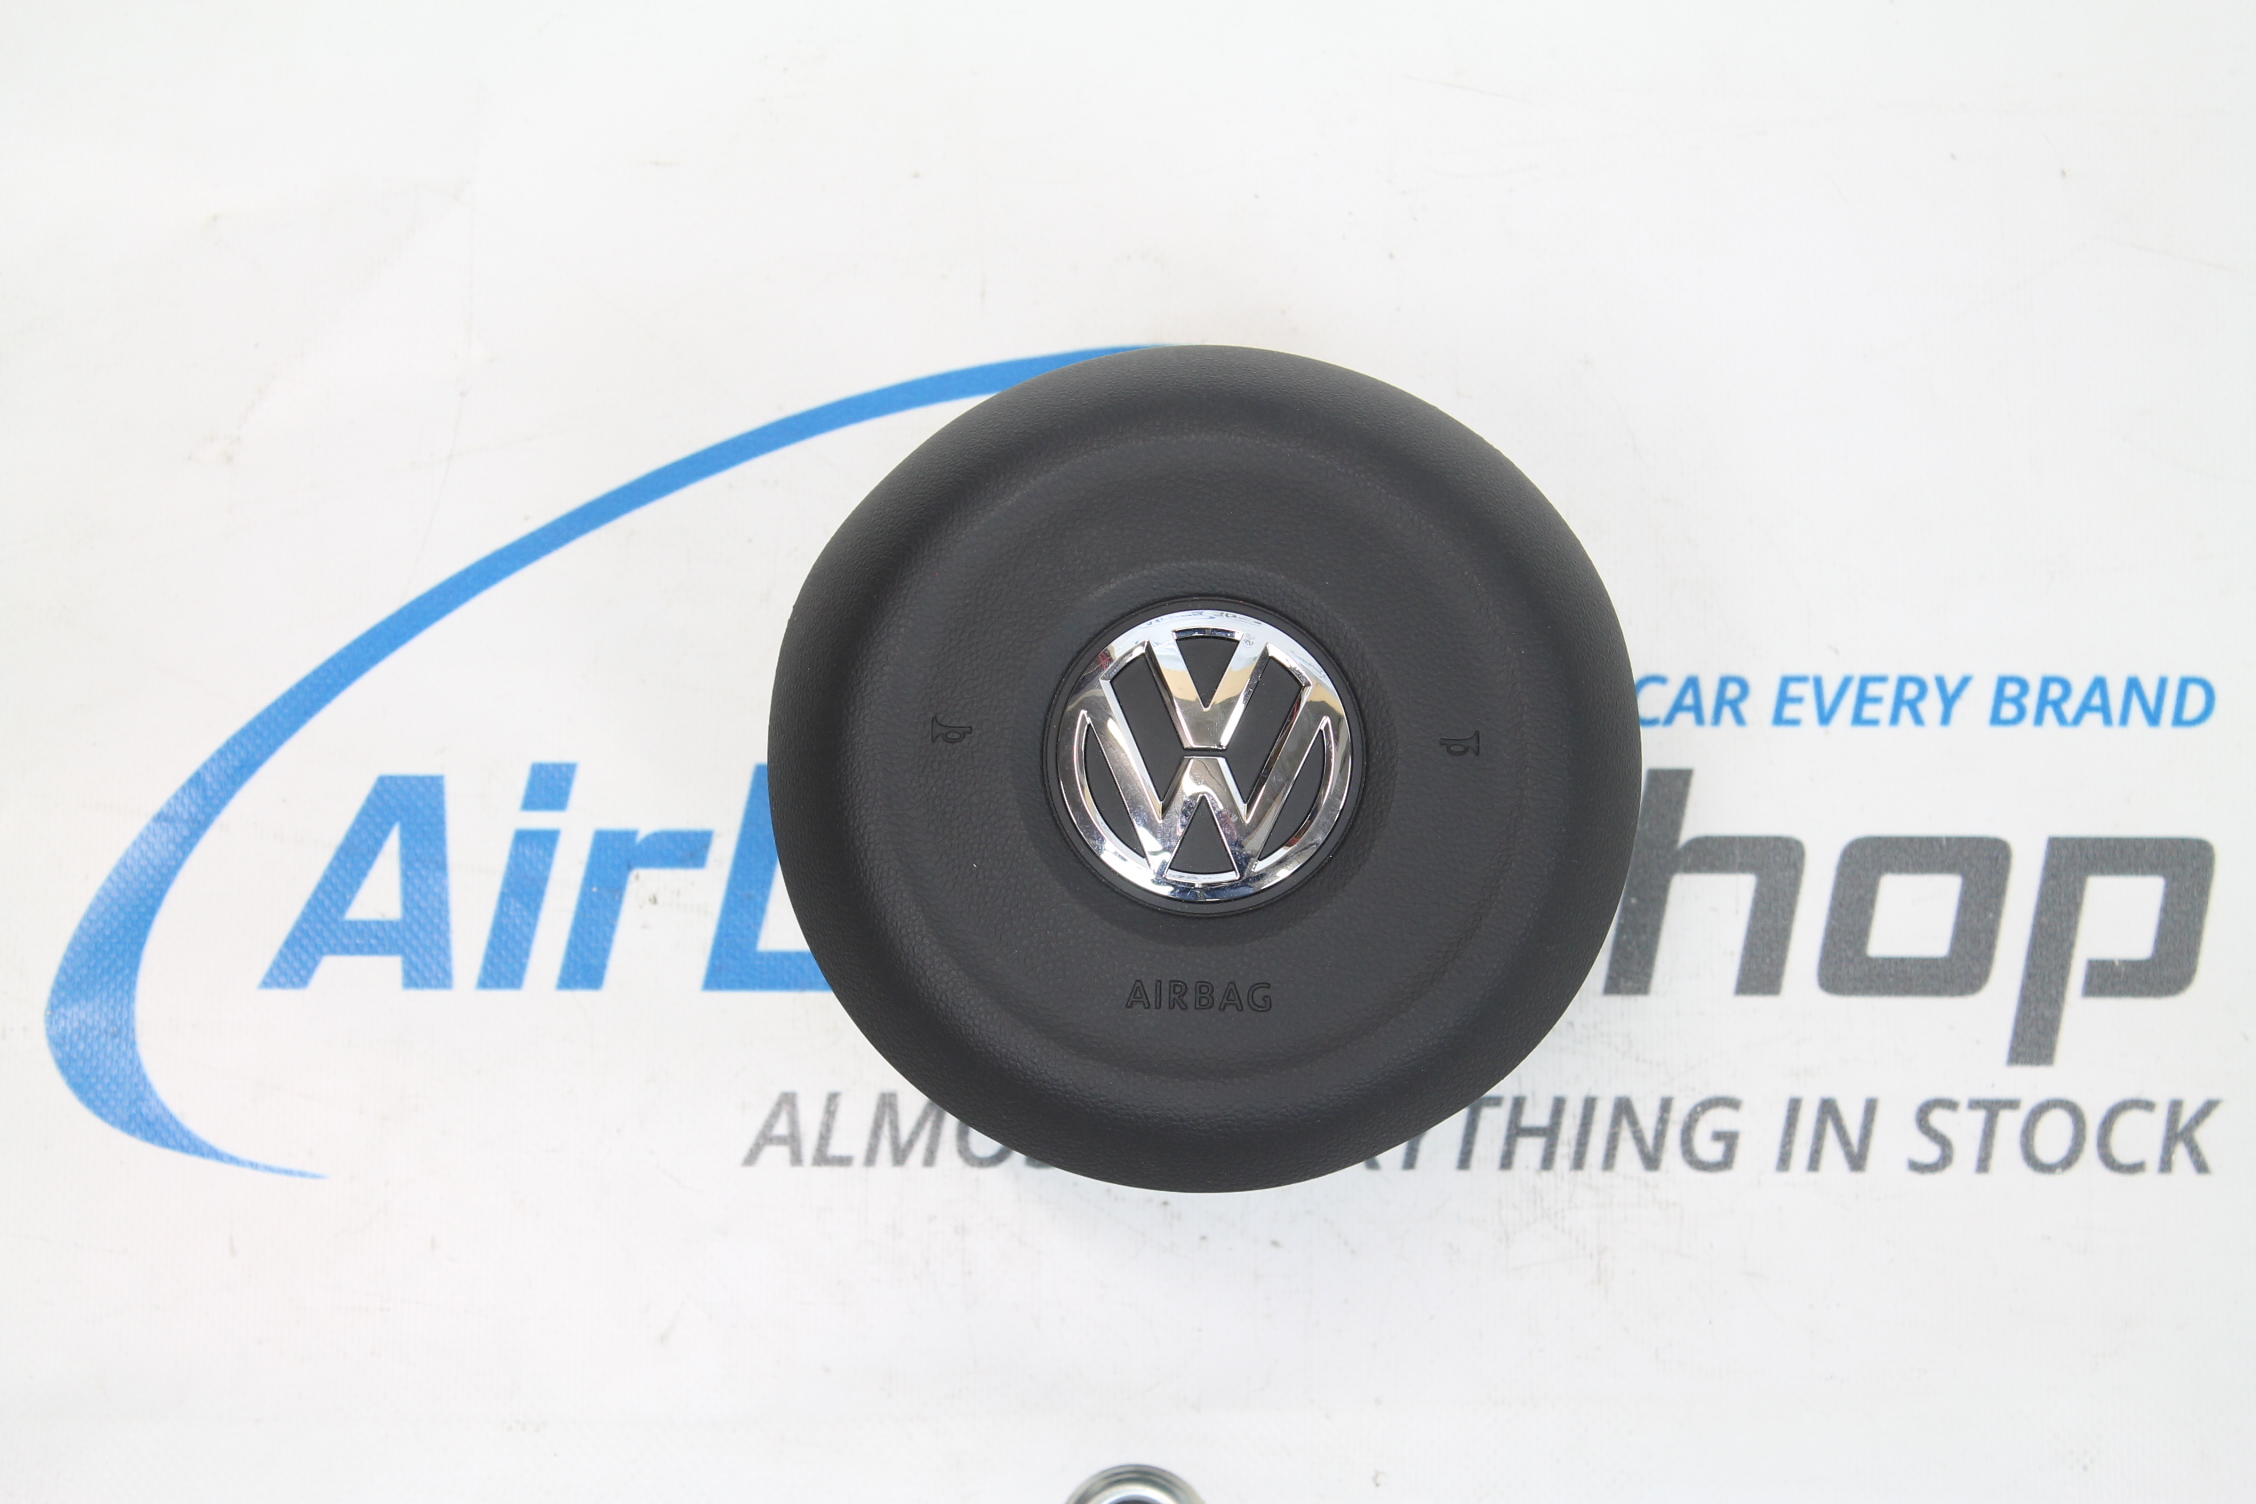 Driver airbag Volkswagen Up (2012-.) buy ? – Airbag.eu